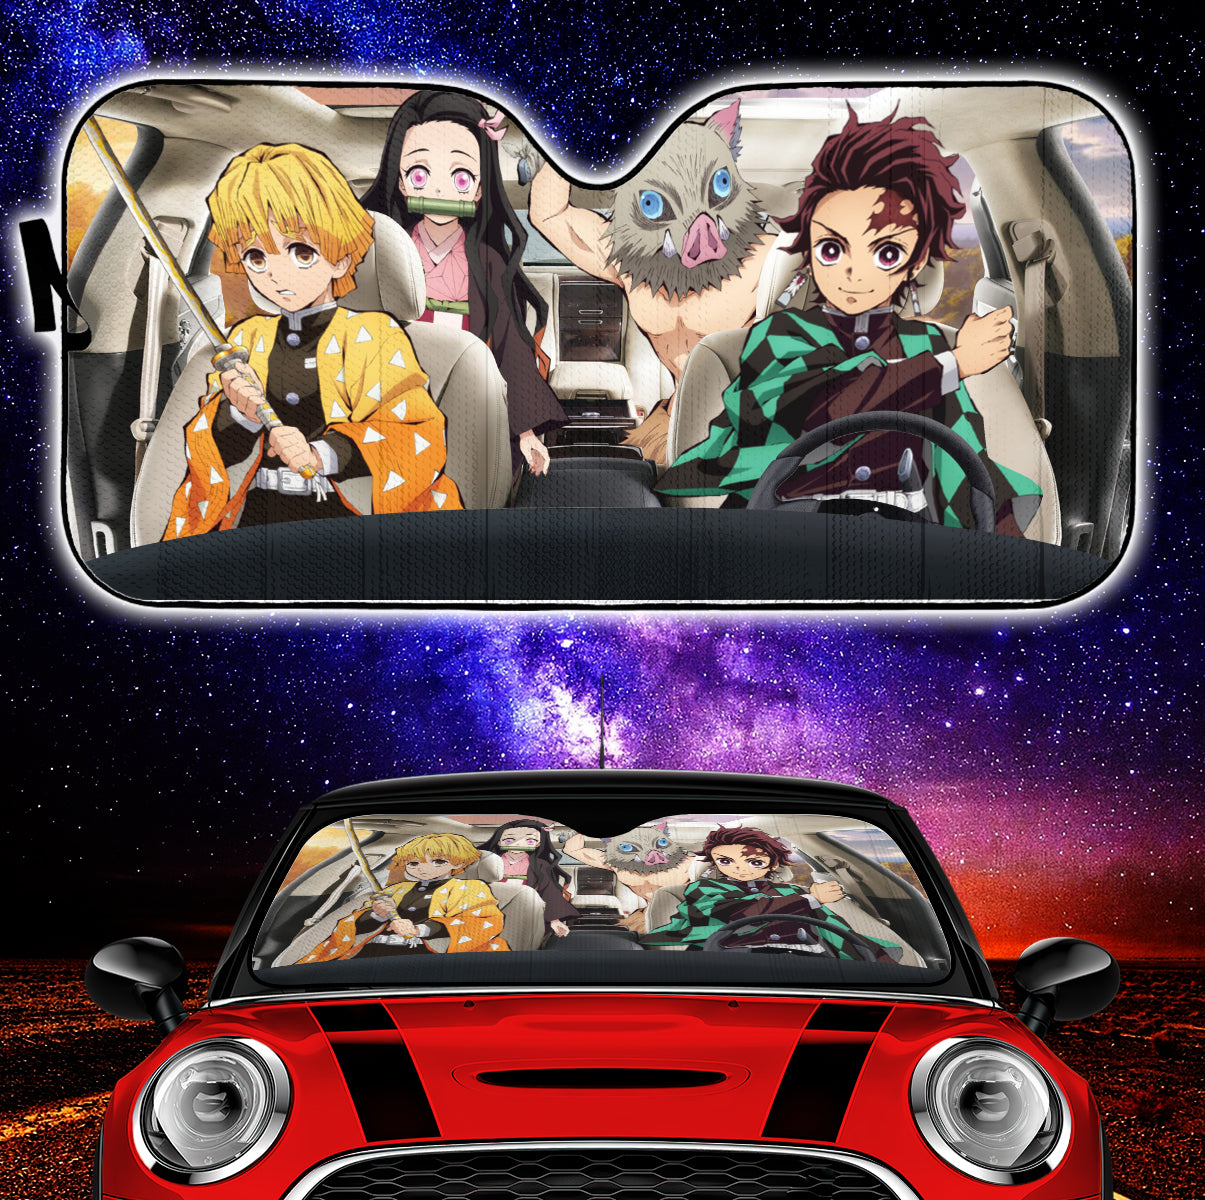 Anime Demon Slayer Team Funny Car Auto Sun Shades Windshield Accessories Decor Gift